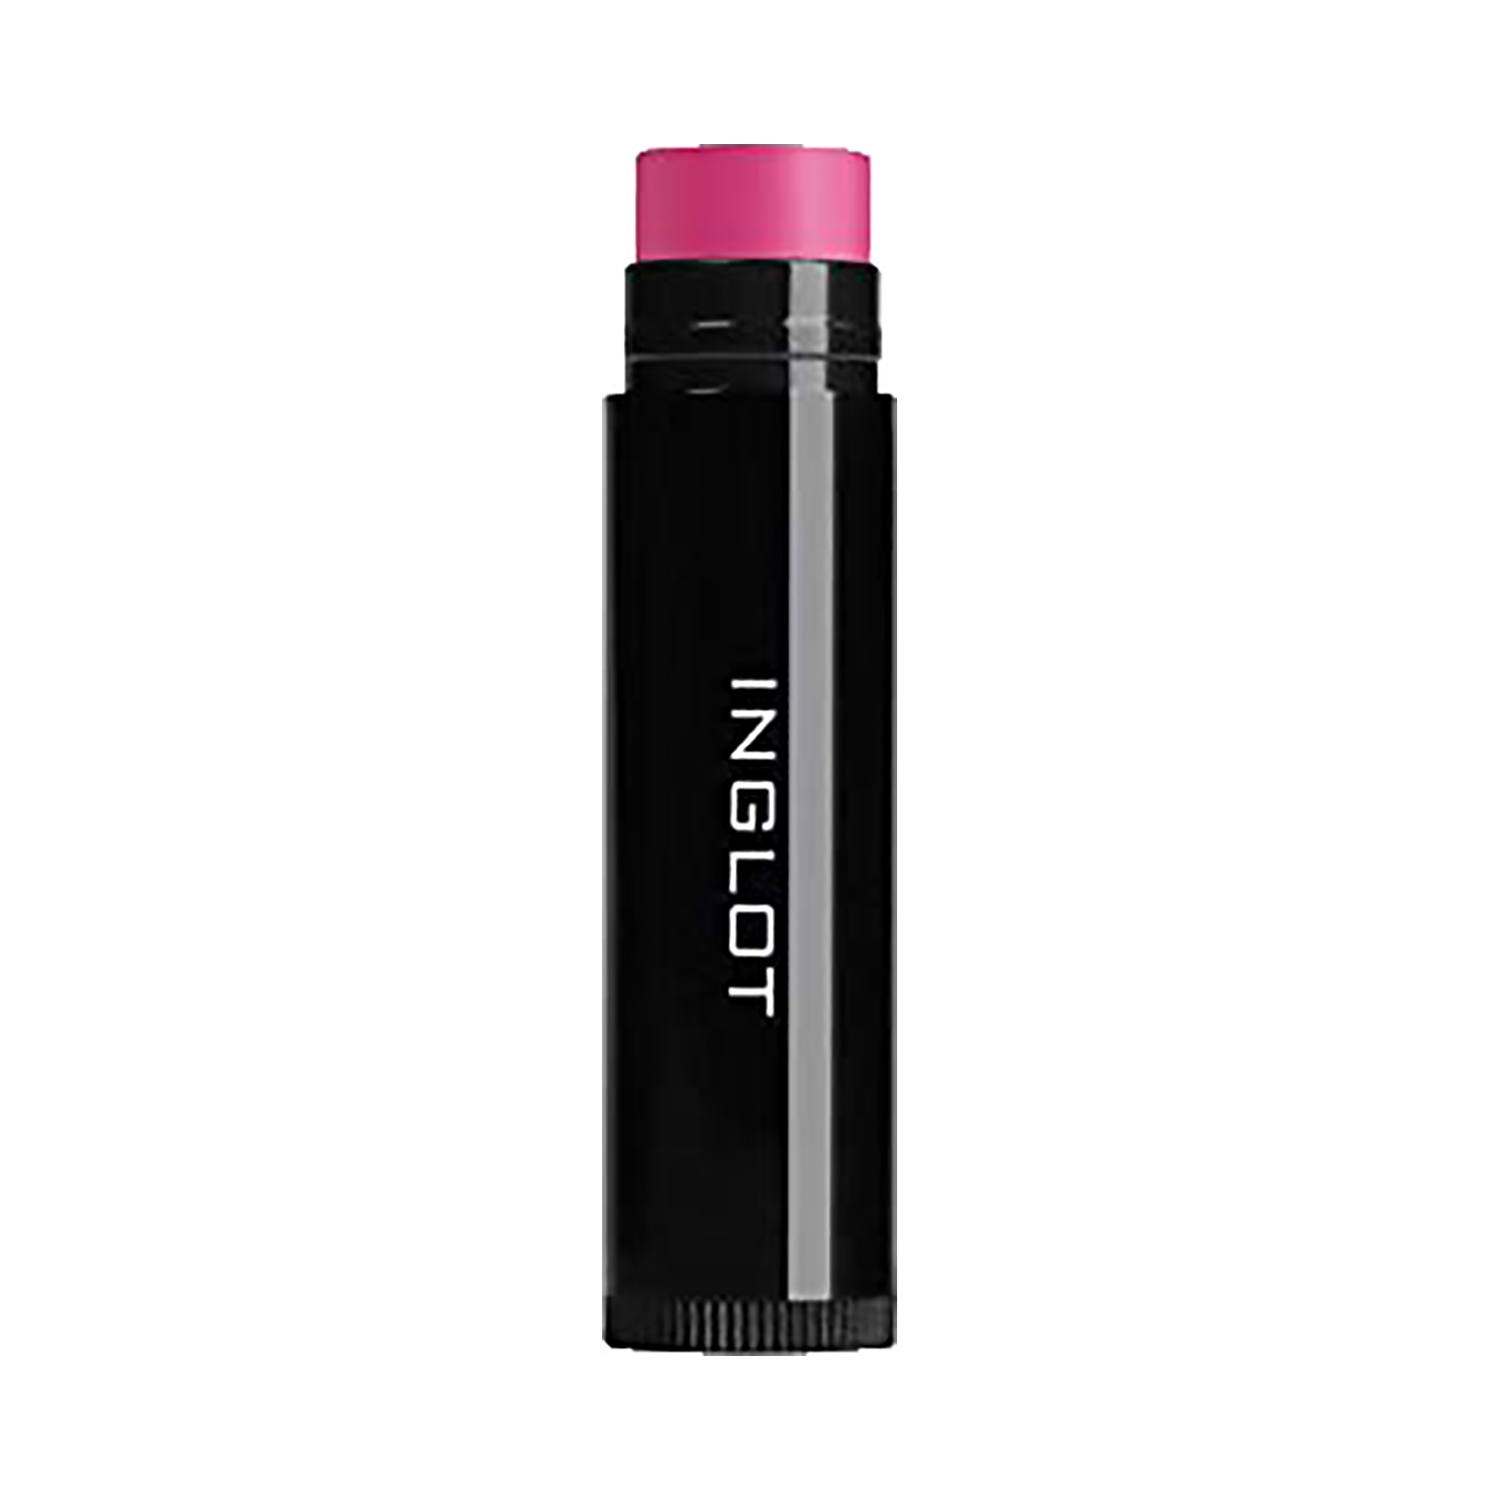 INGLOT Rich Care Lipstick - 02 Pink (5g)